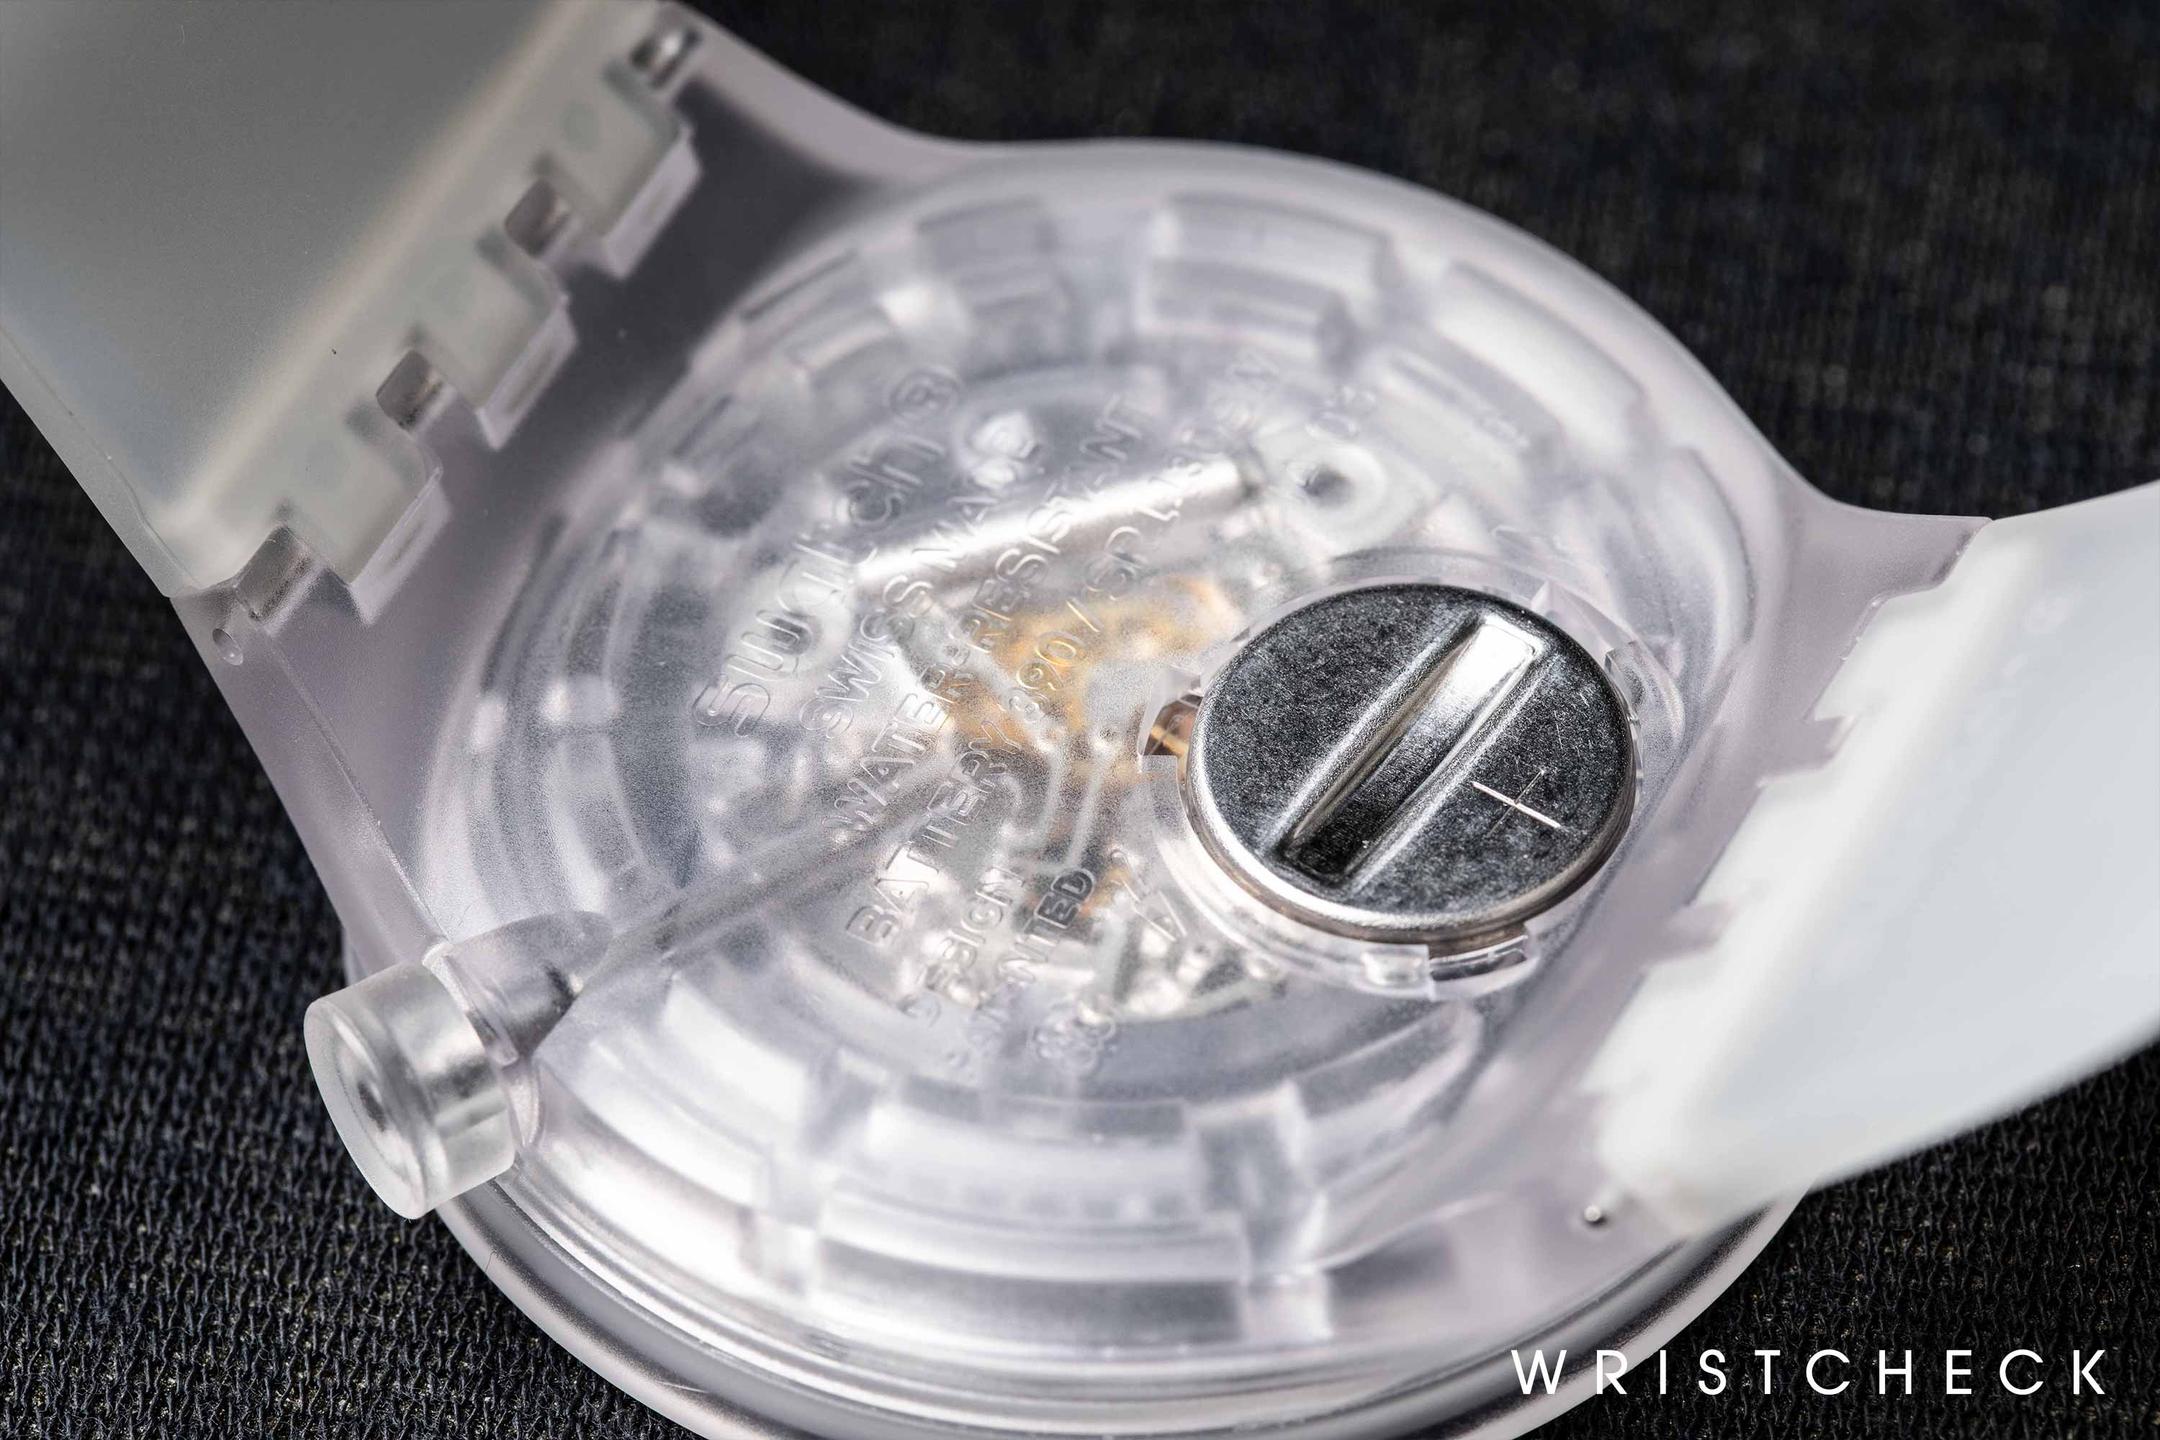 Case back of Swatch quartz watch